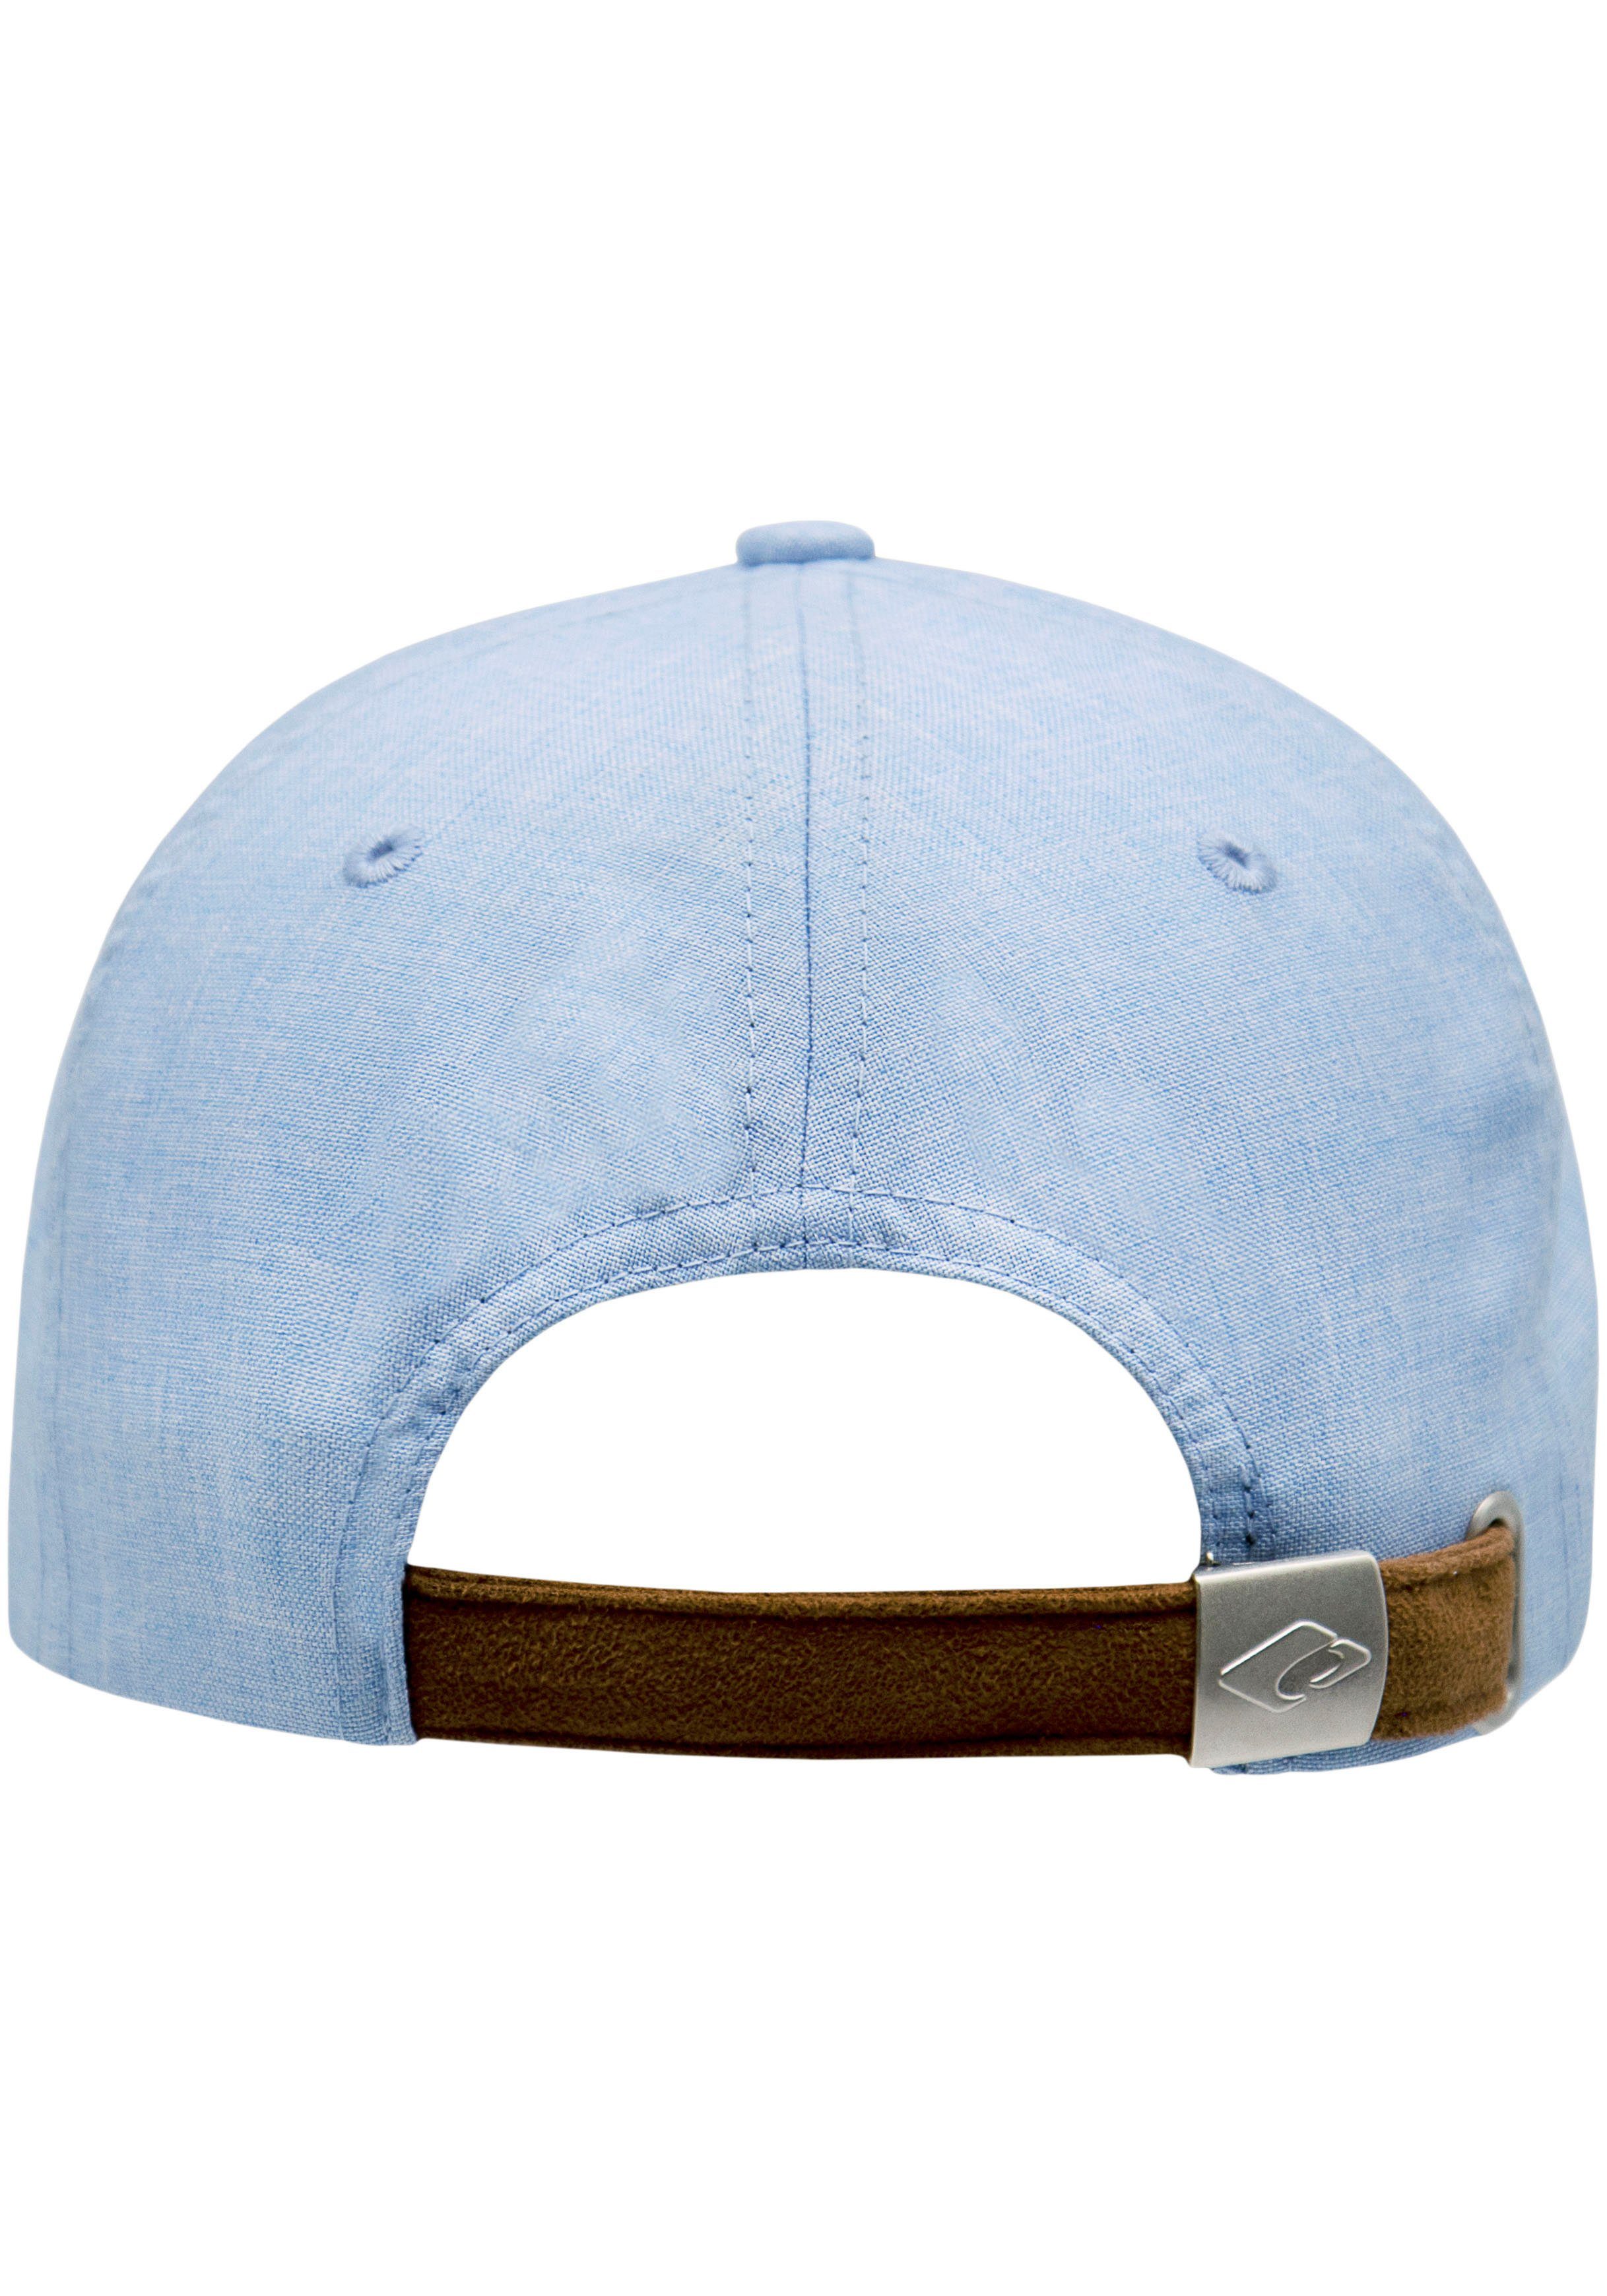 One hellblau melierter verstellbar Size, chillouts Baseball Cap Hat in Amadora Optik,